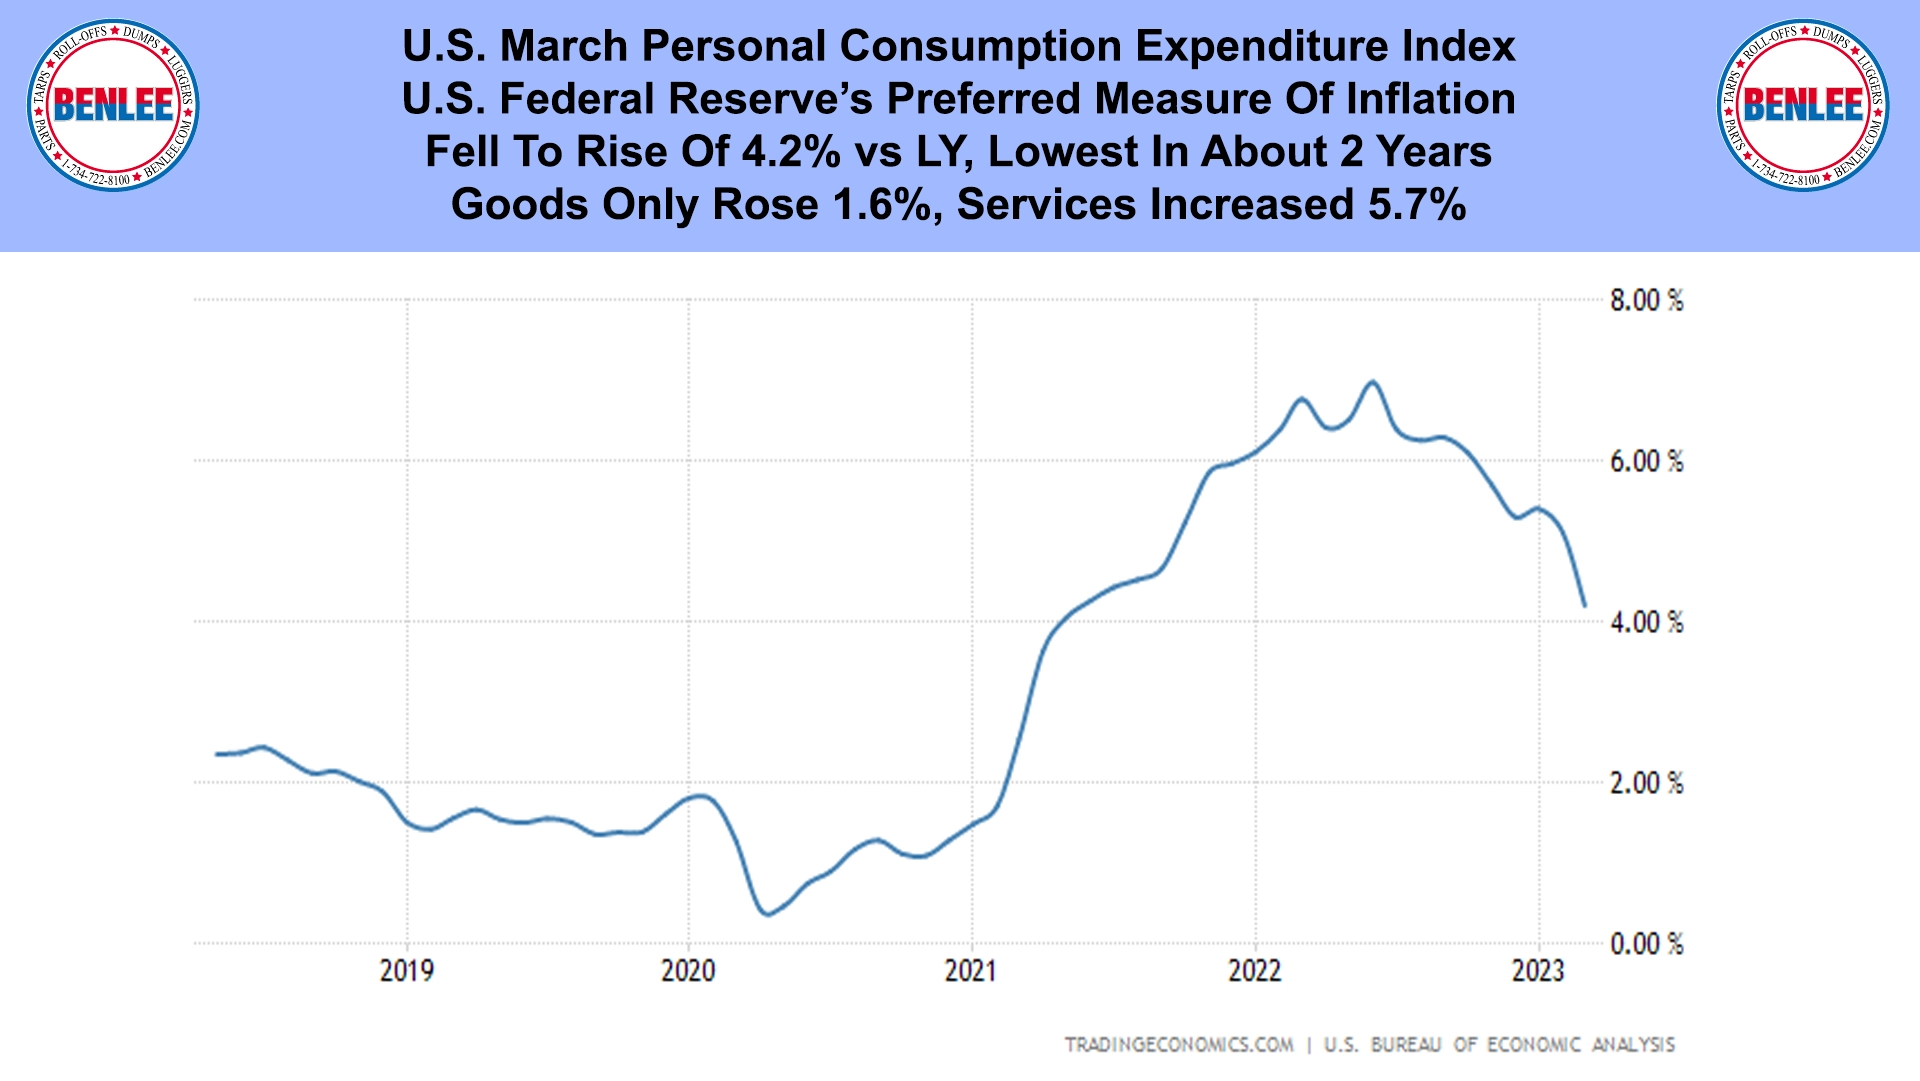 U.S. March Personal Consumption Expenditure Index